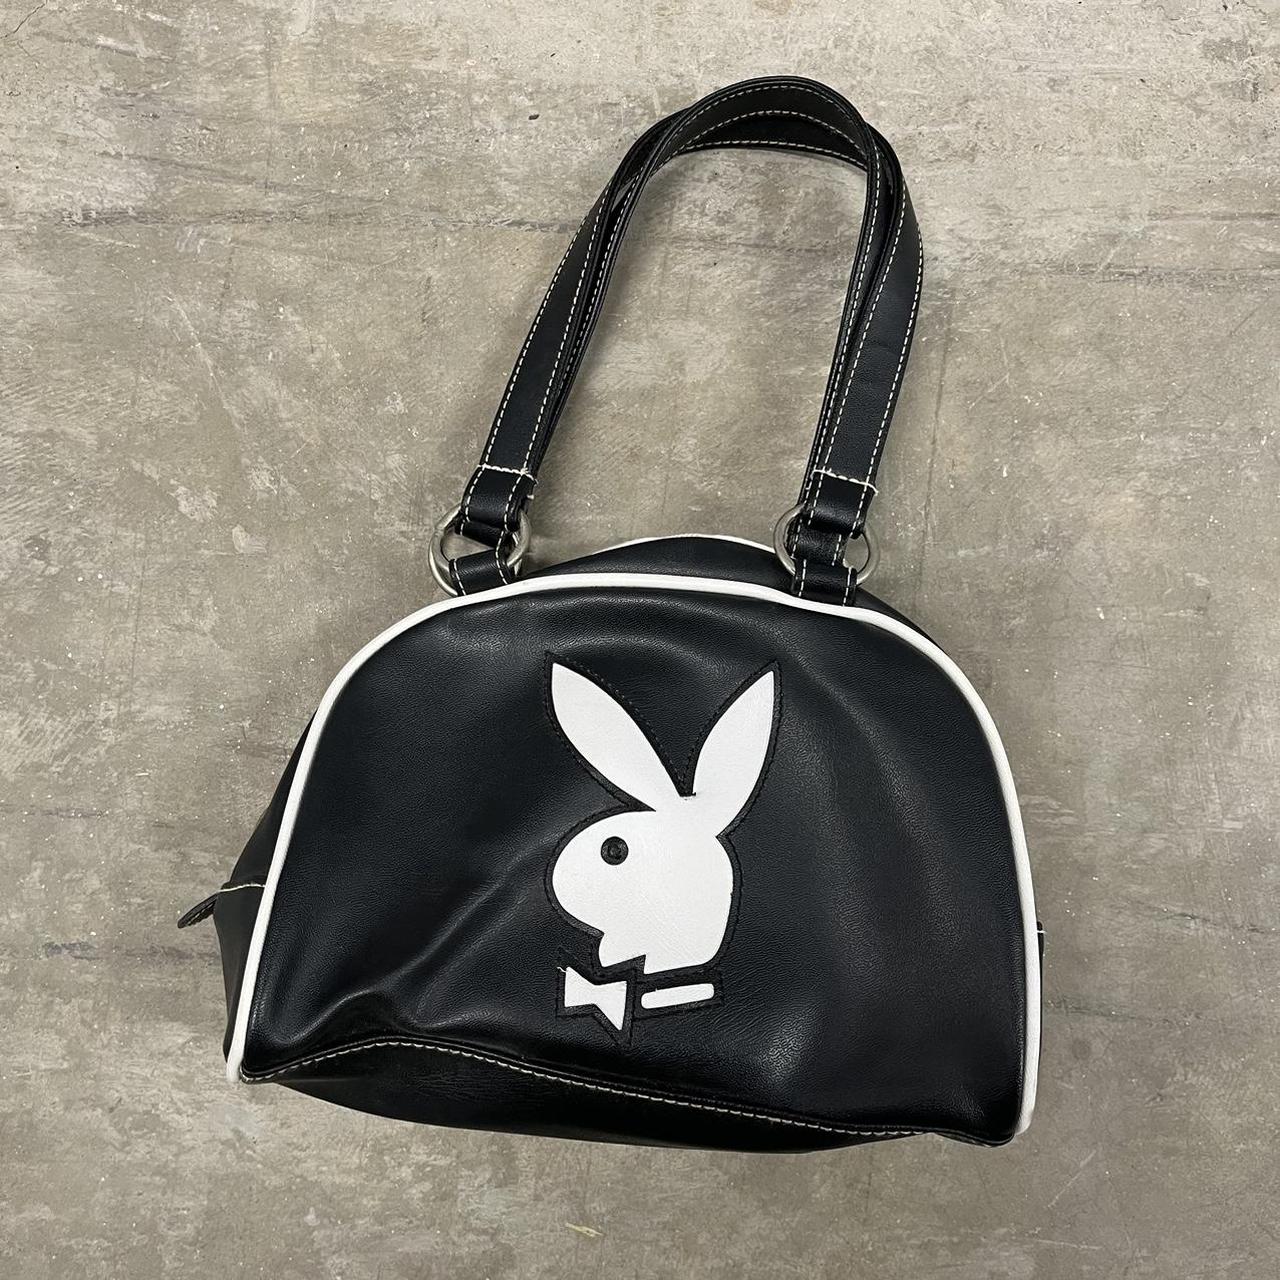 Playboy Bunny Head Logo Coin Purse Bag Black w/Playboy Bunny Removable  Charm NWT | eBay